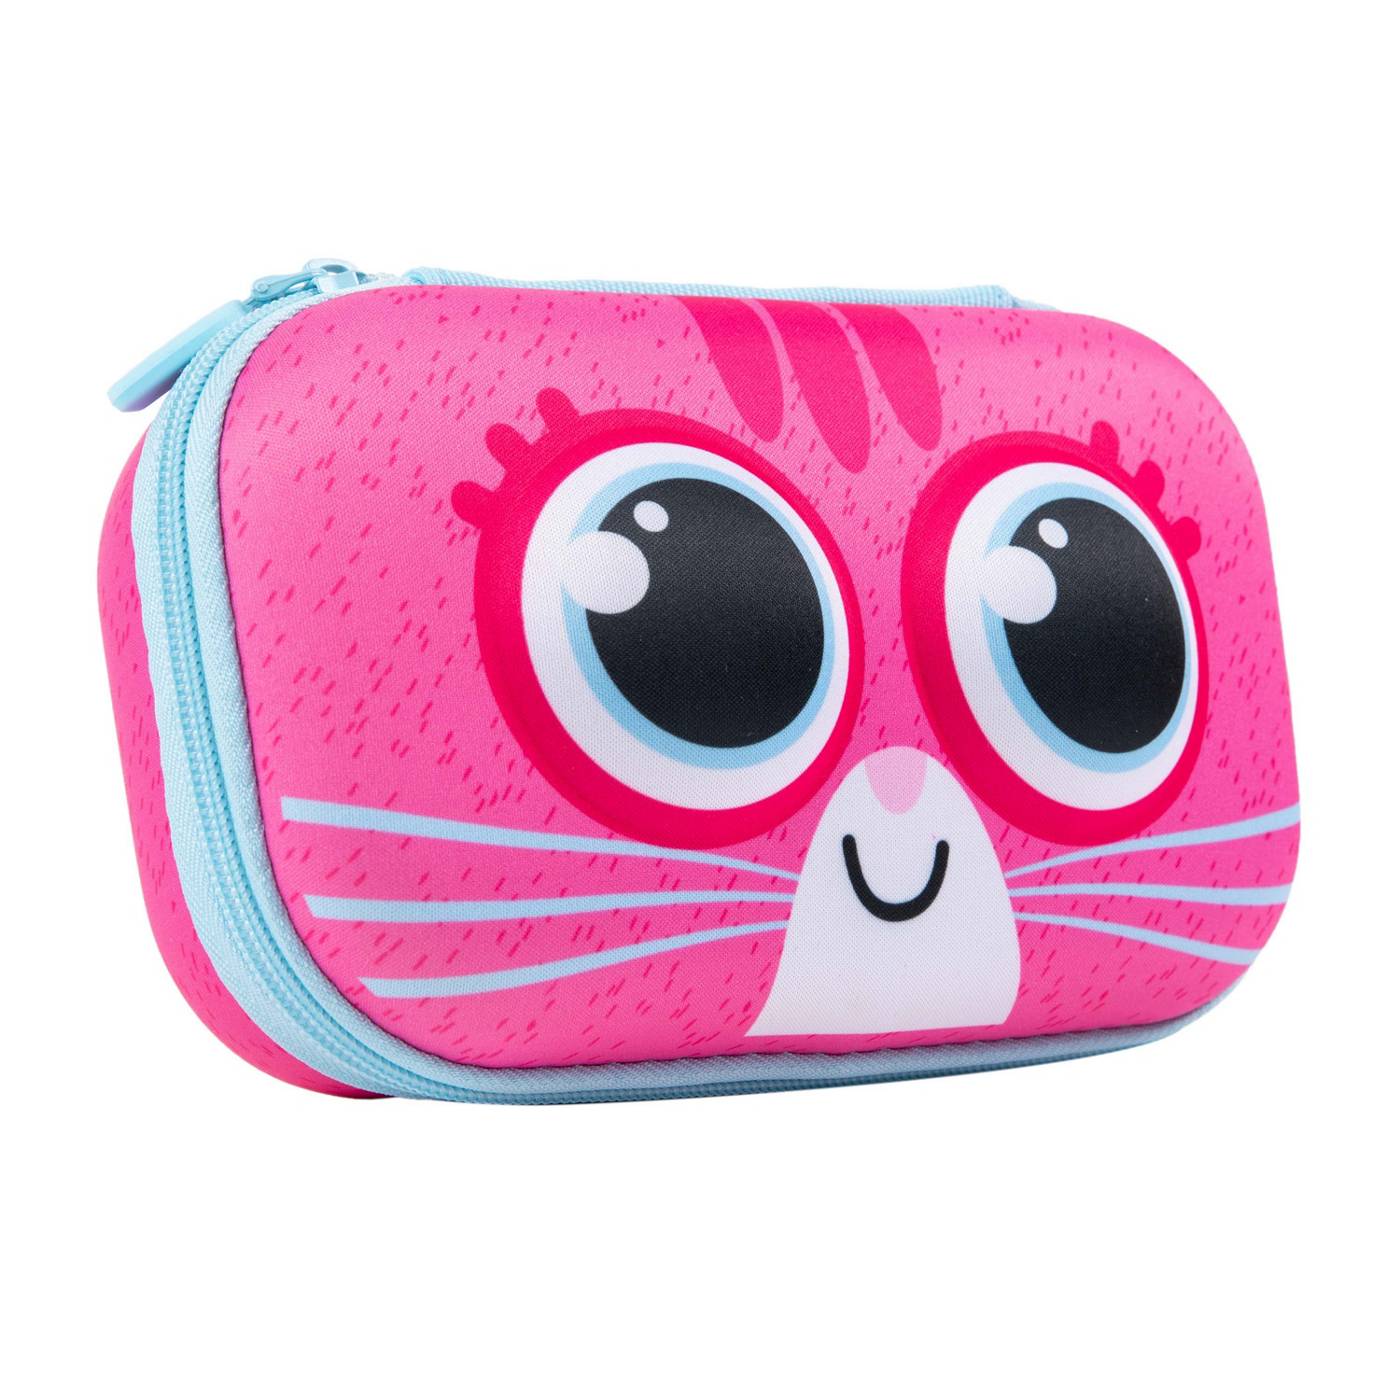 ZIPIT Creature Pencil Box - Pink Cat; image 1 of 6